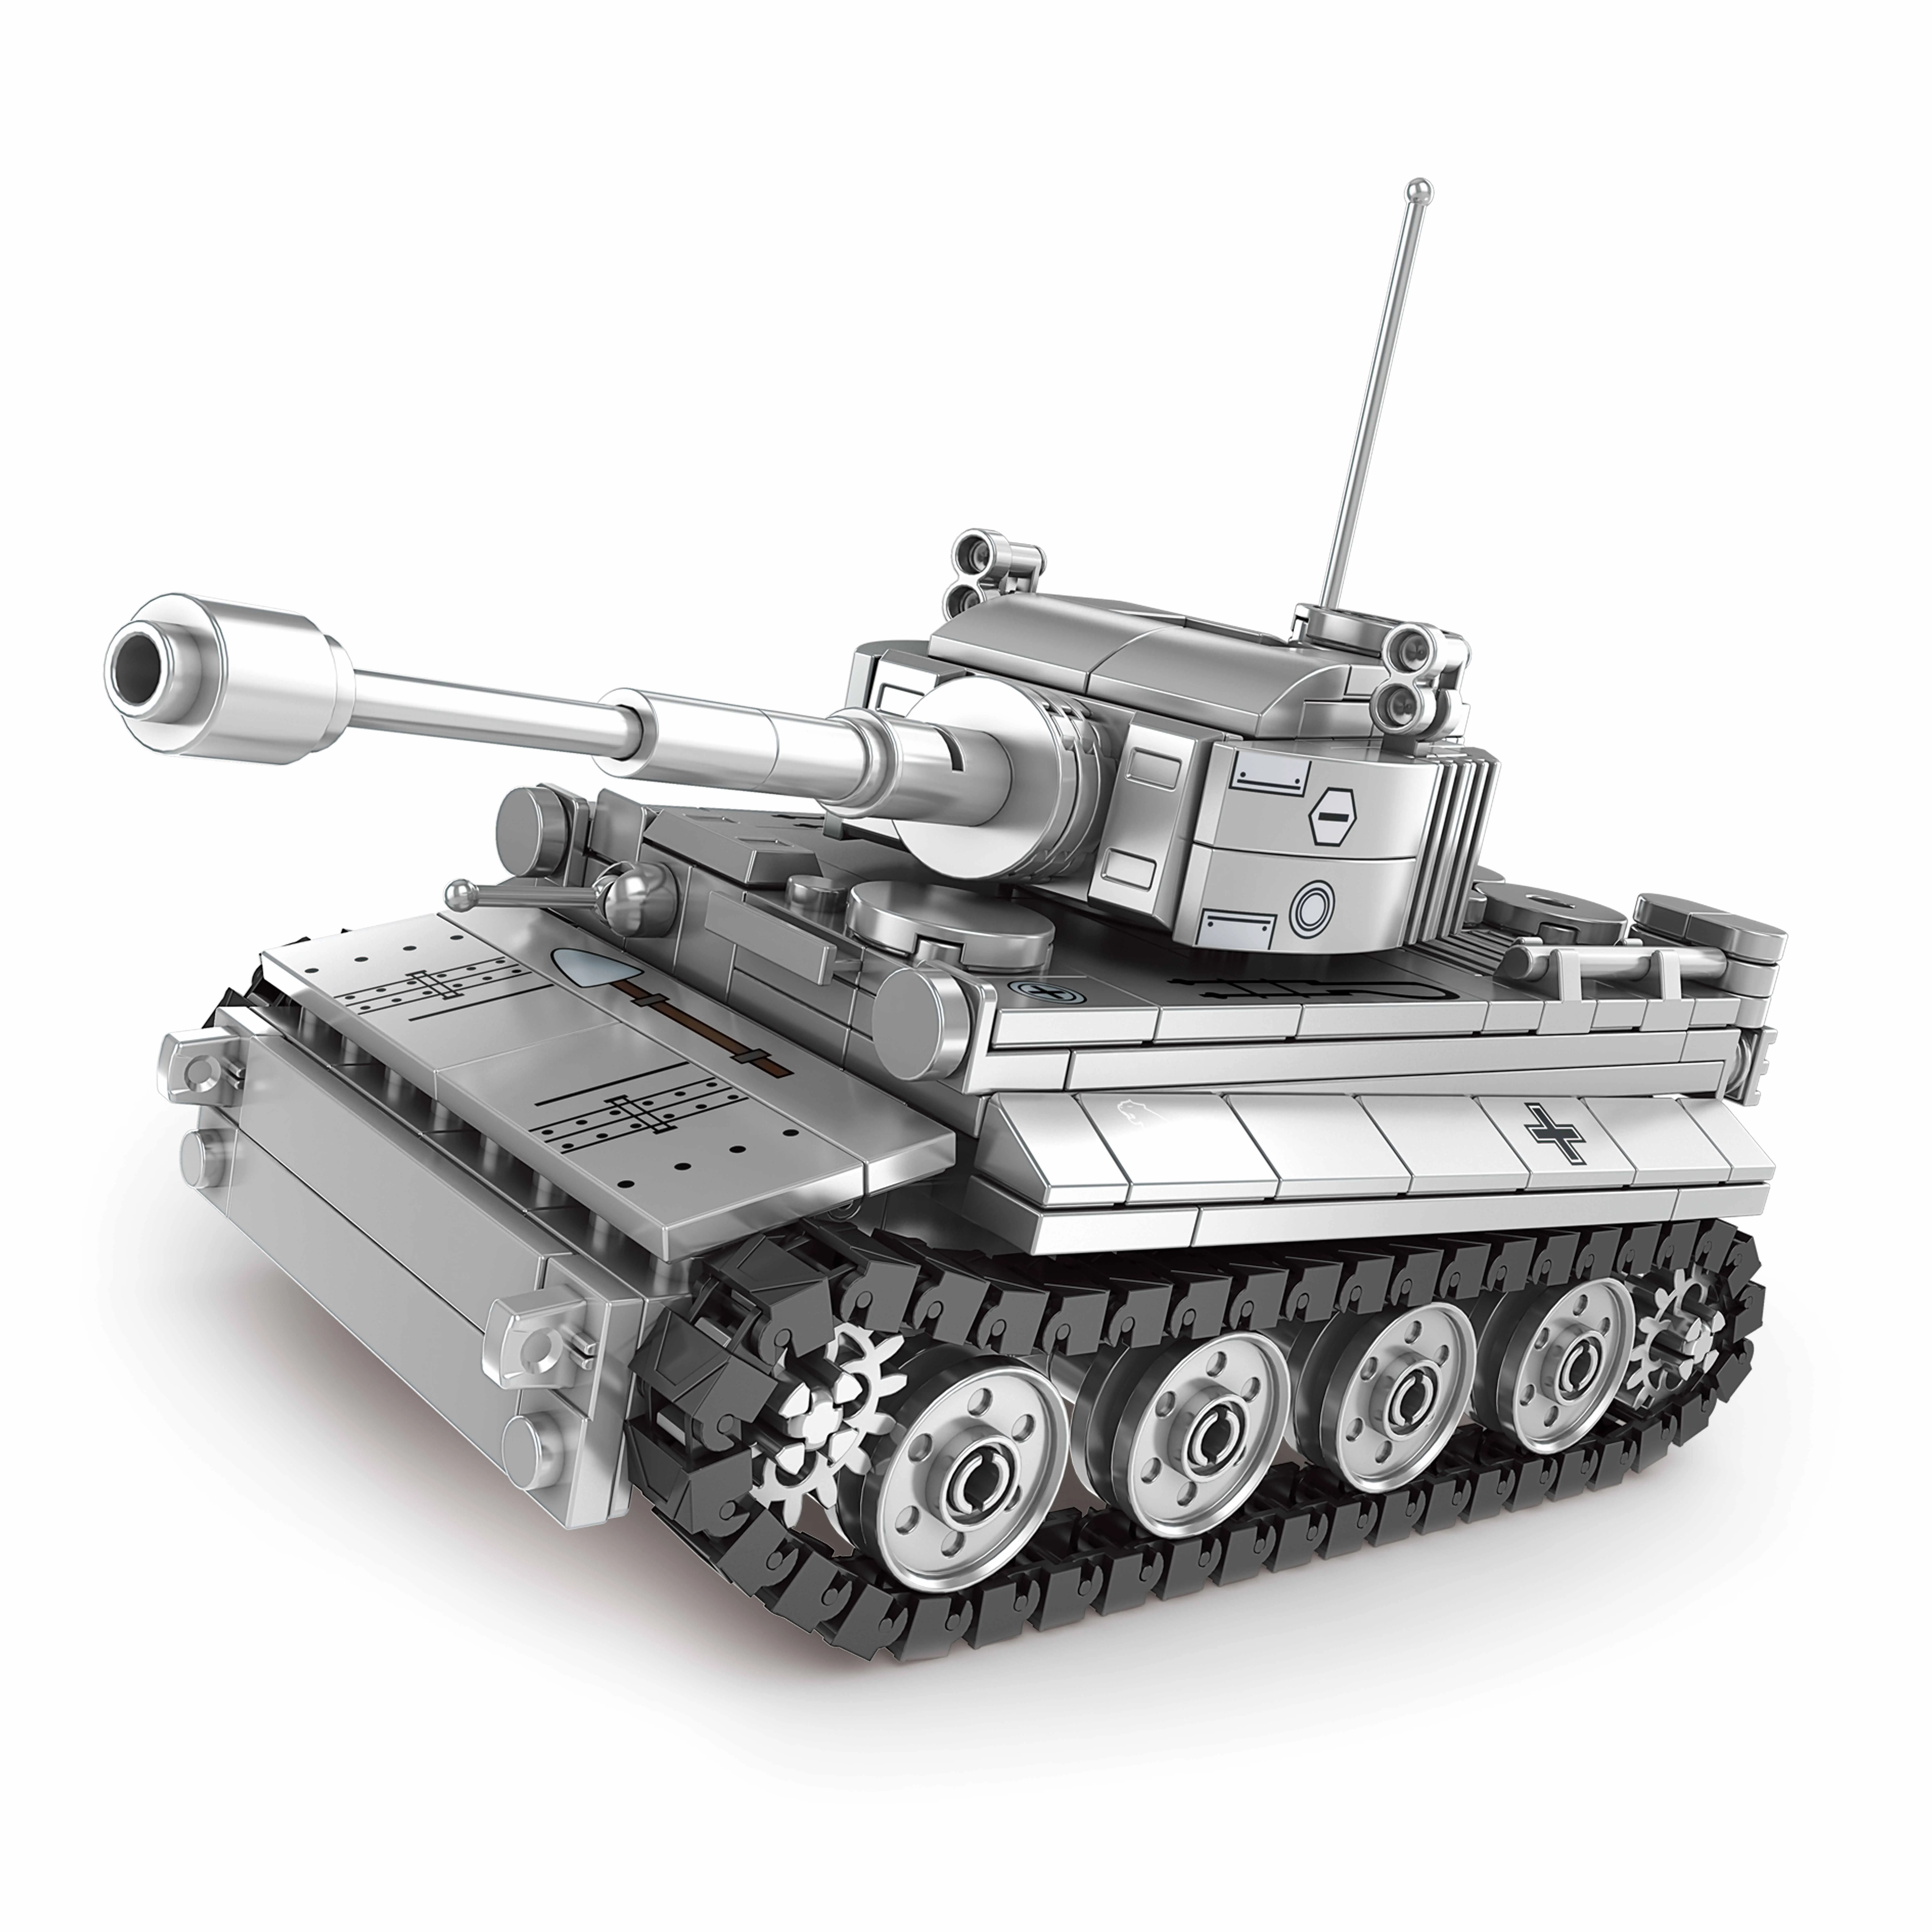 JUHANG-نموذج مكعبات بناء عسكري, دبابة النمر ww2 89004 ، ل Legoings